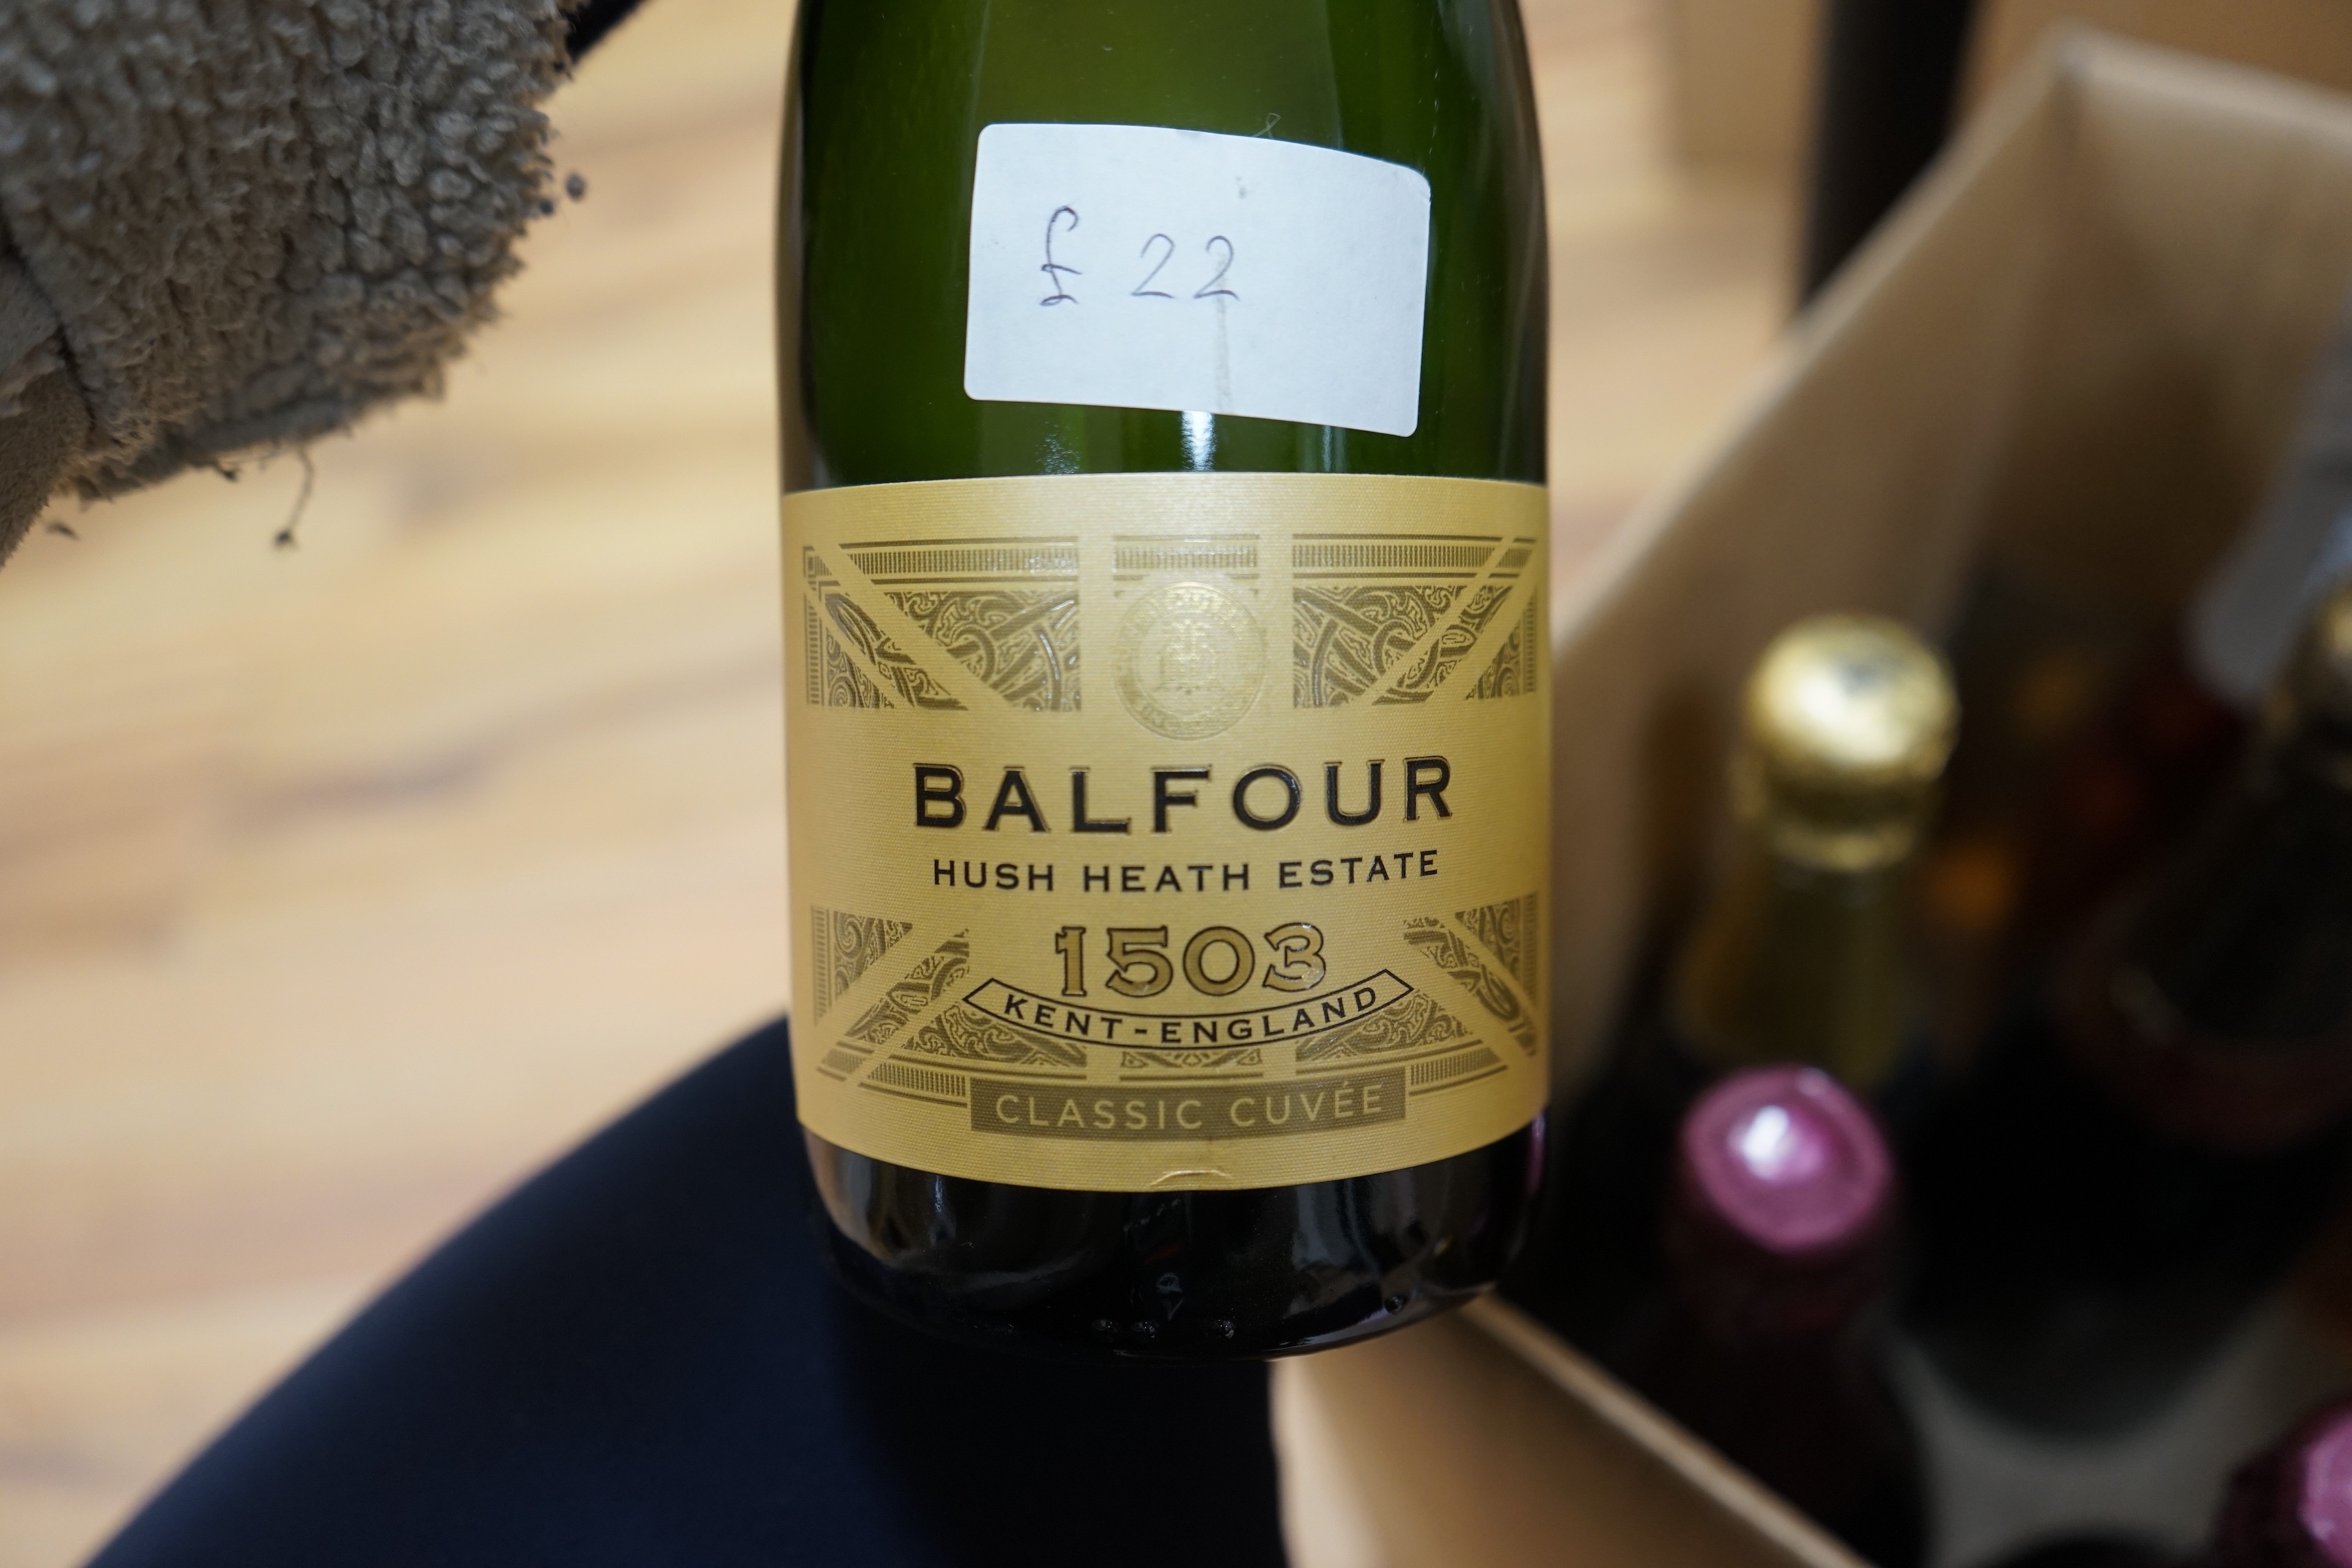 Nine bottles of champagne / sparkling wine - 3 bottles of L’extra Langlois, 2 bottles of Bleasdale sparkling Shiraz, 1 bottle of Sainsbury’s Blanc de Noirs champagne, one bottle of Balfour 1503 classic cuvee, one bottle